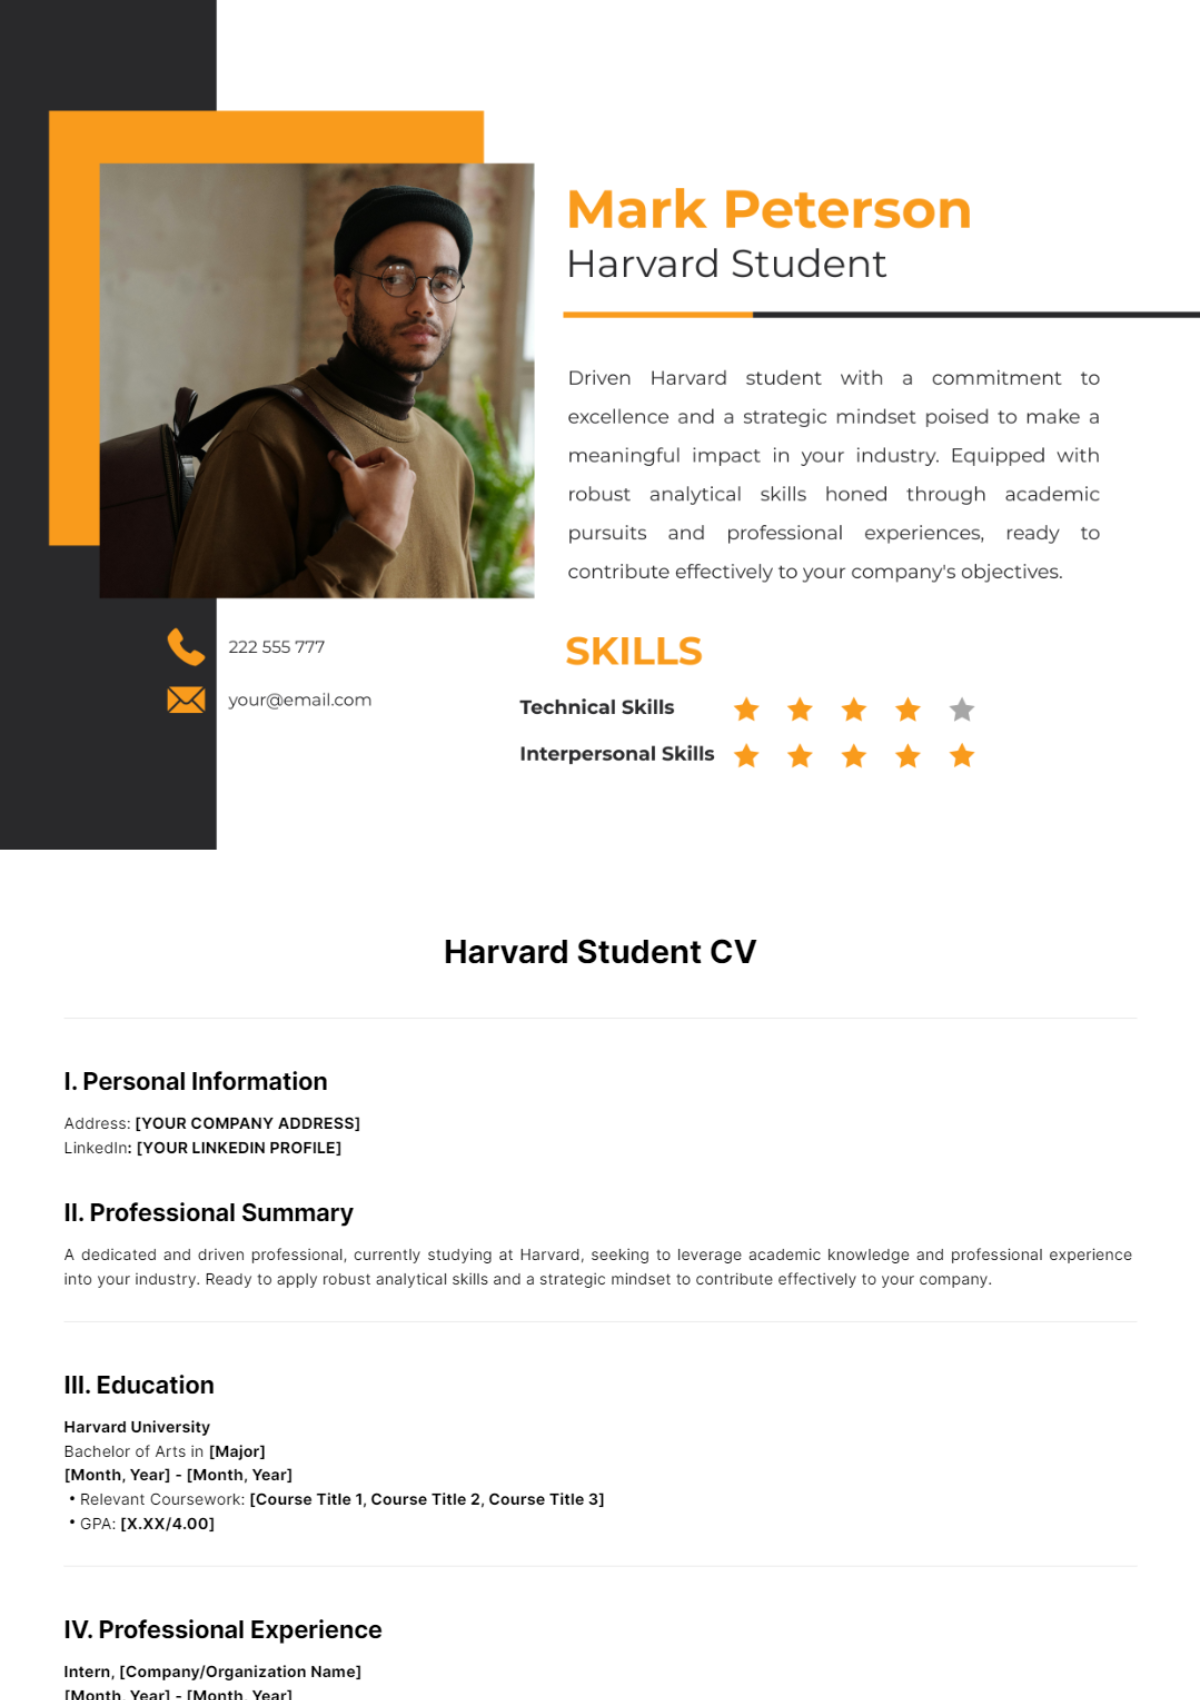 Free Harvard Student CV Template